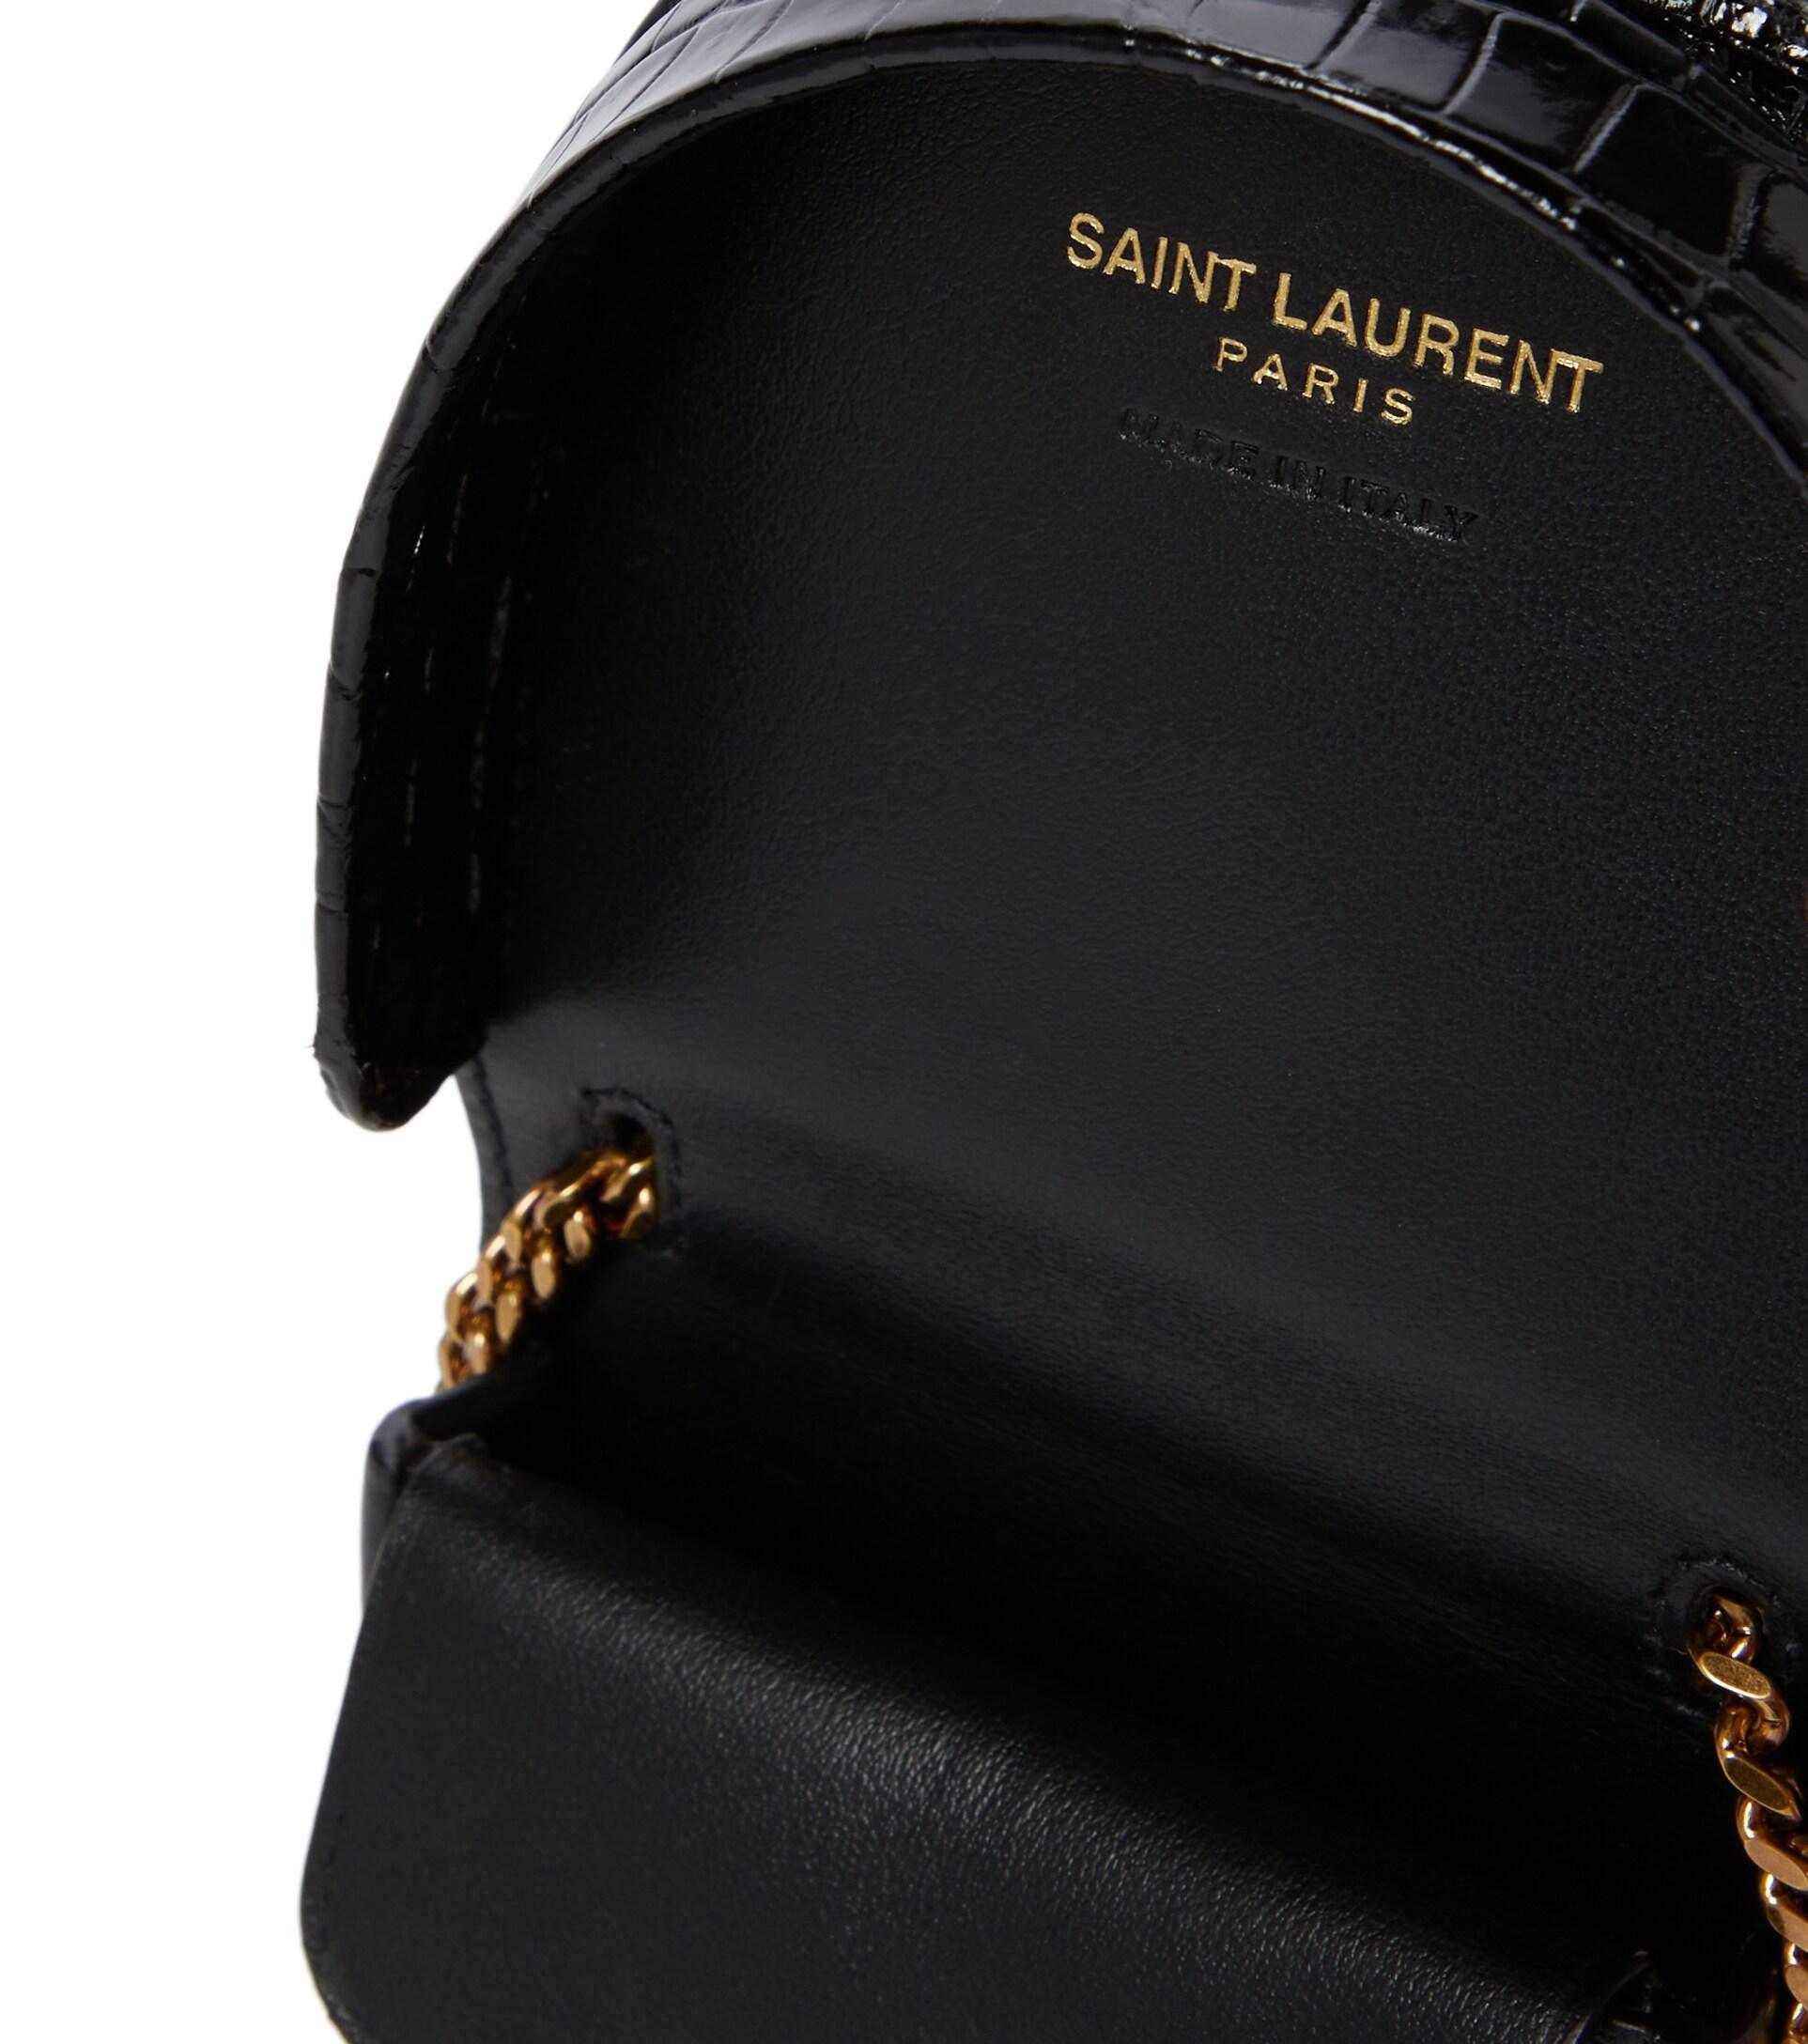 Saint Laurent Baby Kaia Leather Crossbody Bag in Black